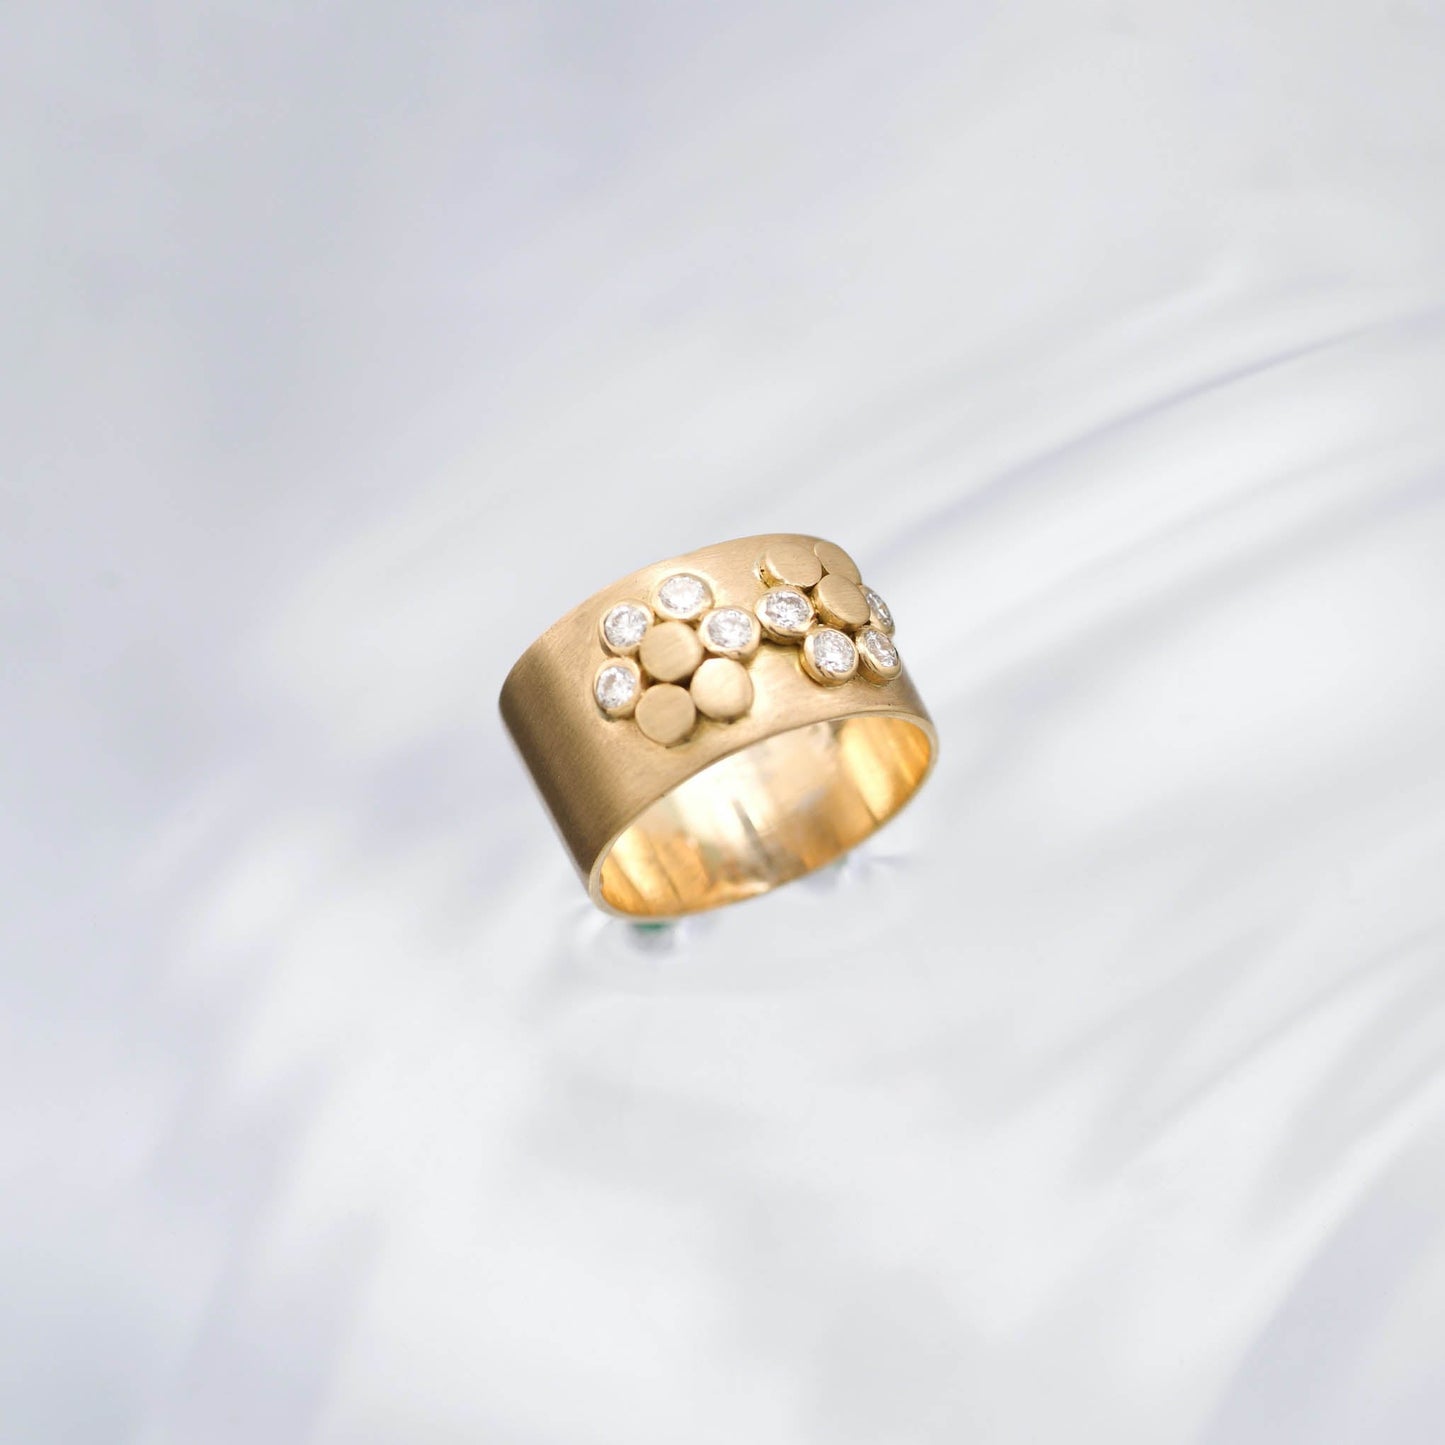 The Akshita Primulus Series Gold and Diamond Ring by Rasvihar